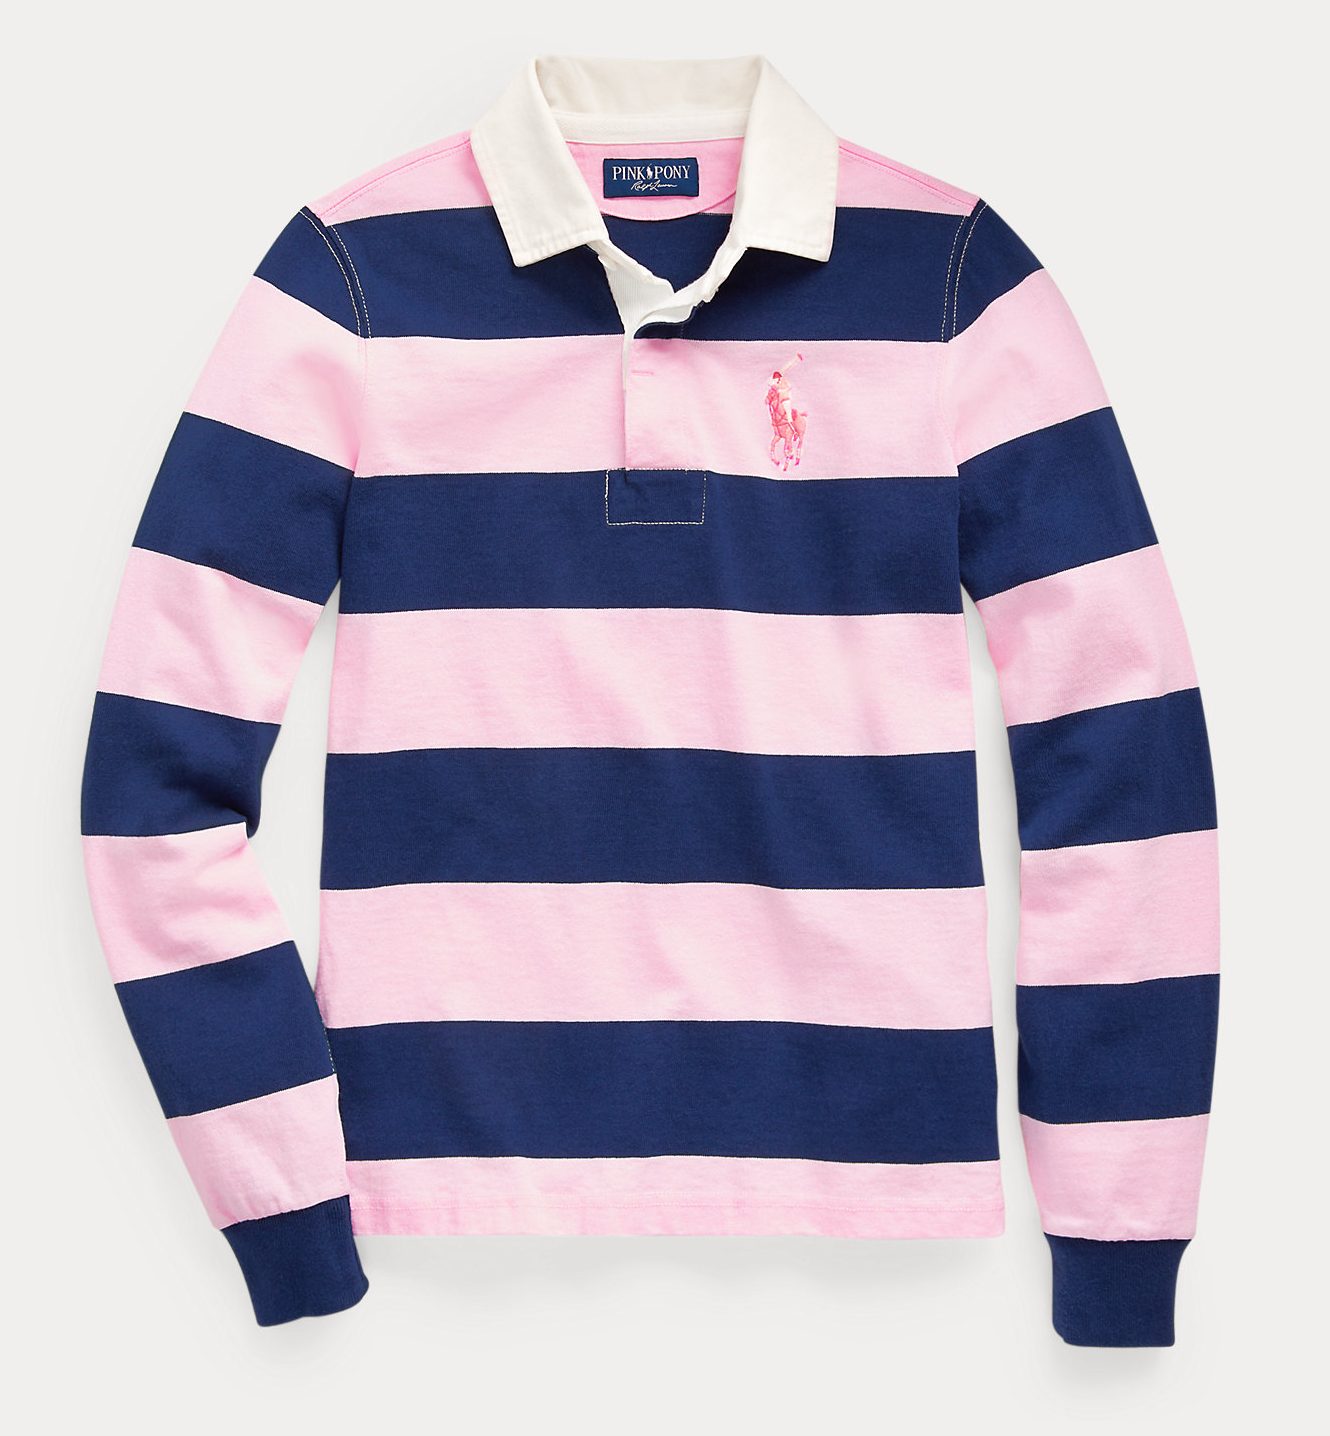 Ralph Lauren Pink Pony Rugby Shirt